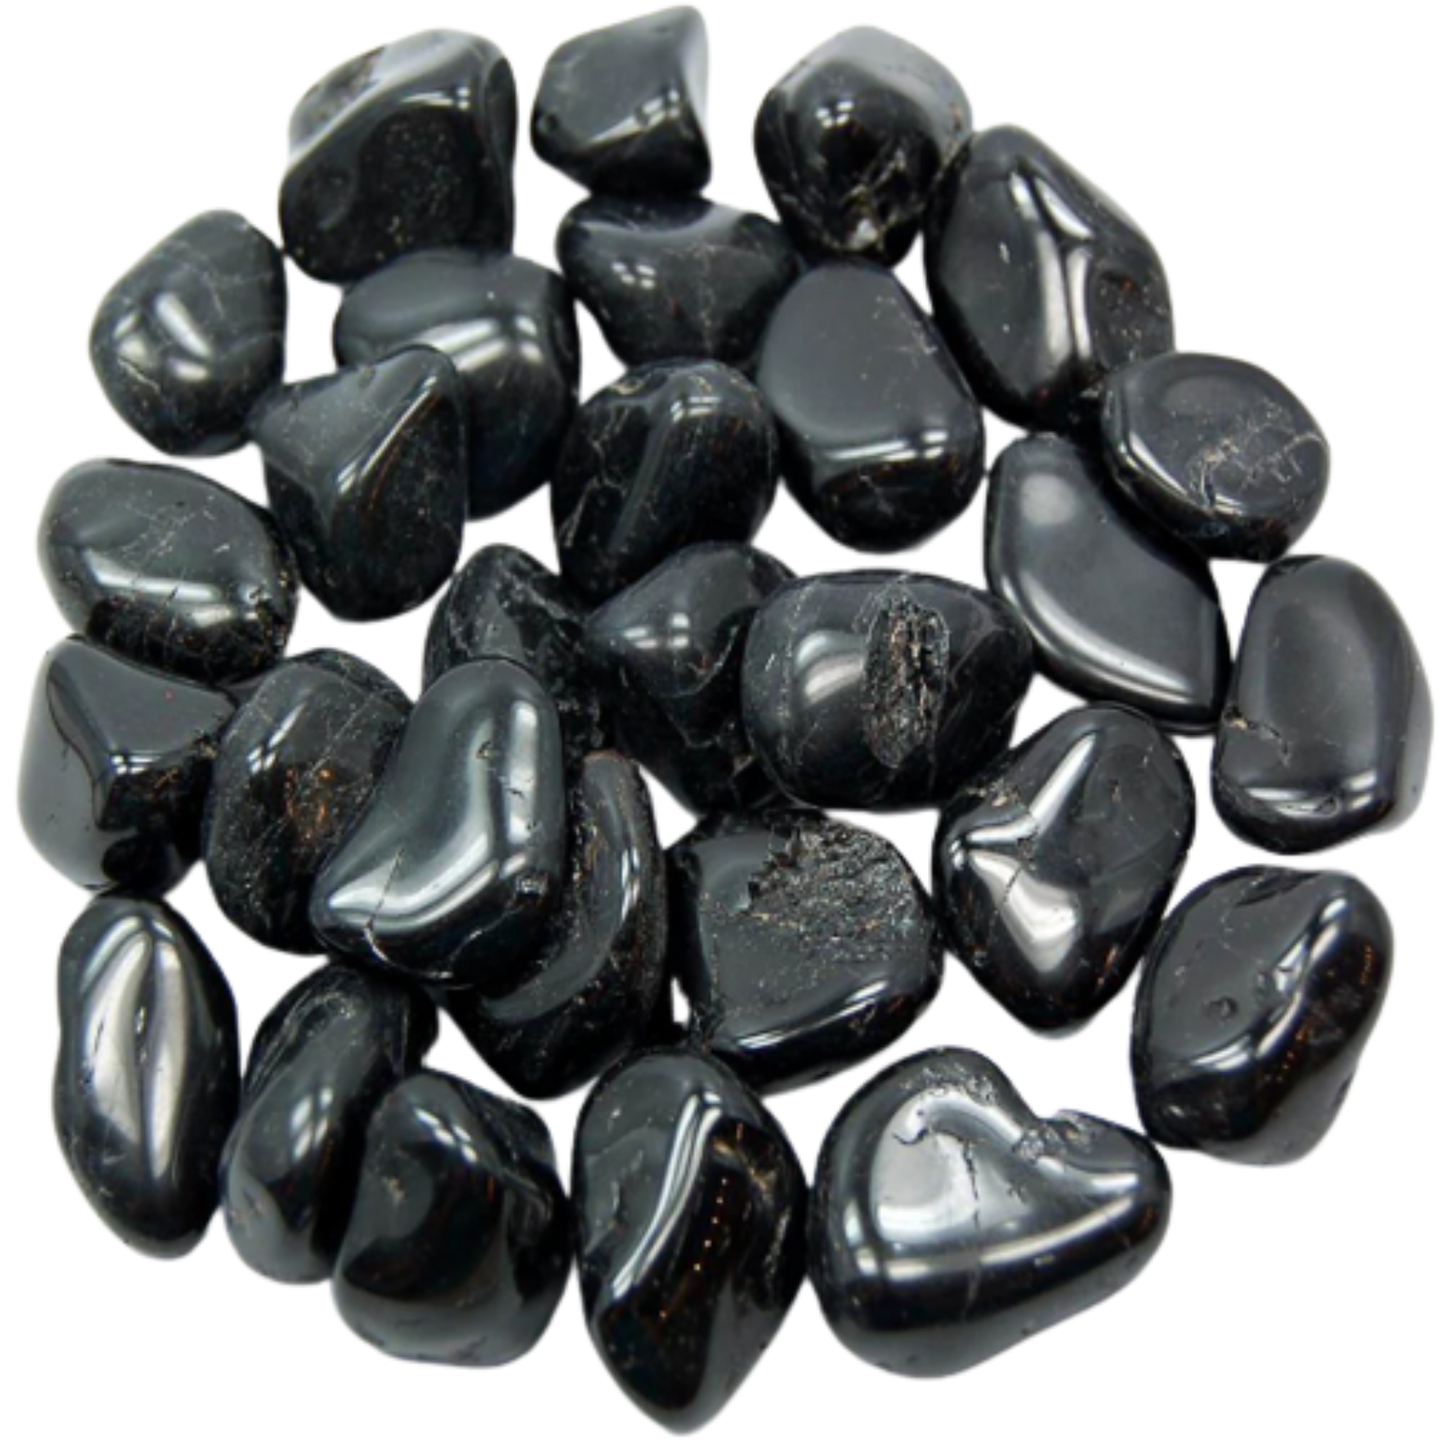 Black Tourmaline Tumbled Stones